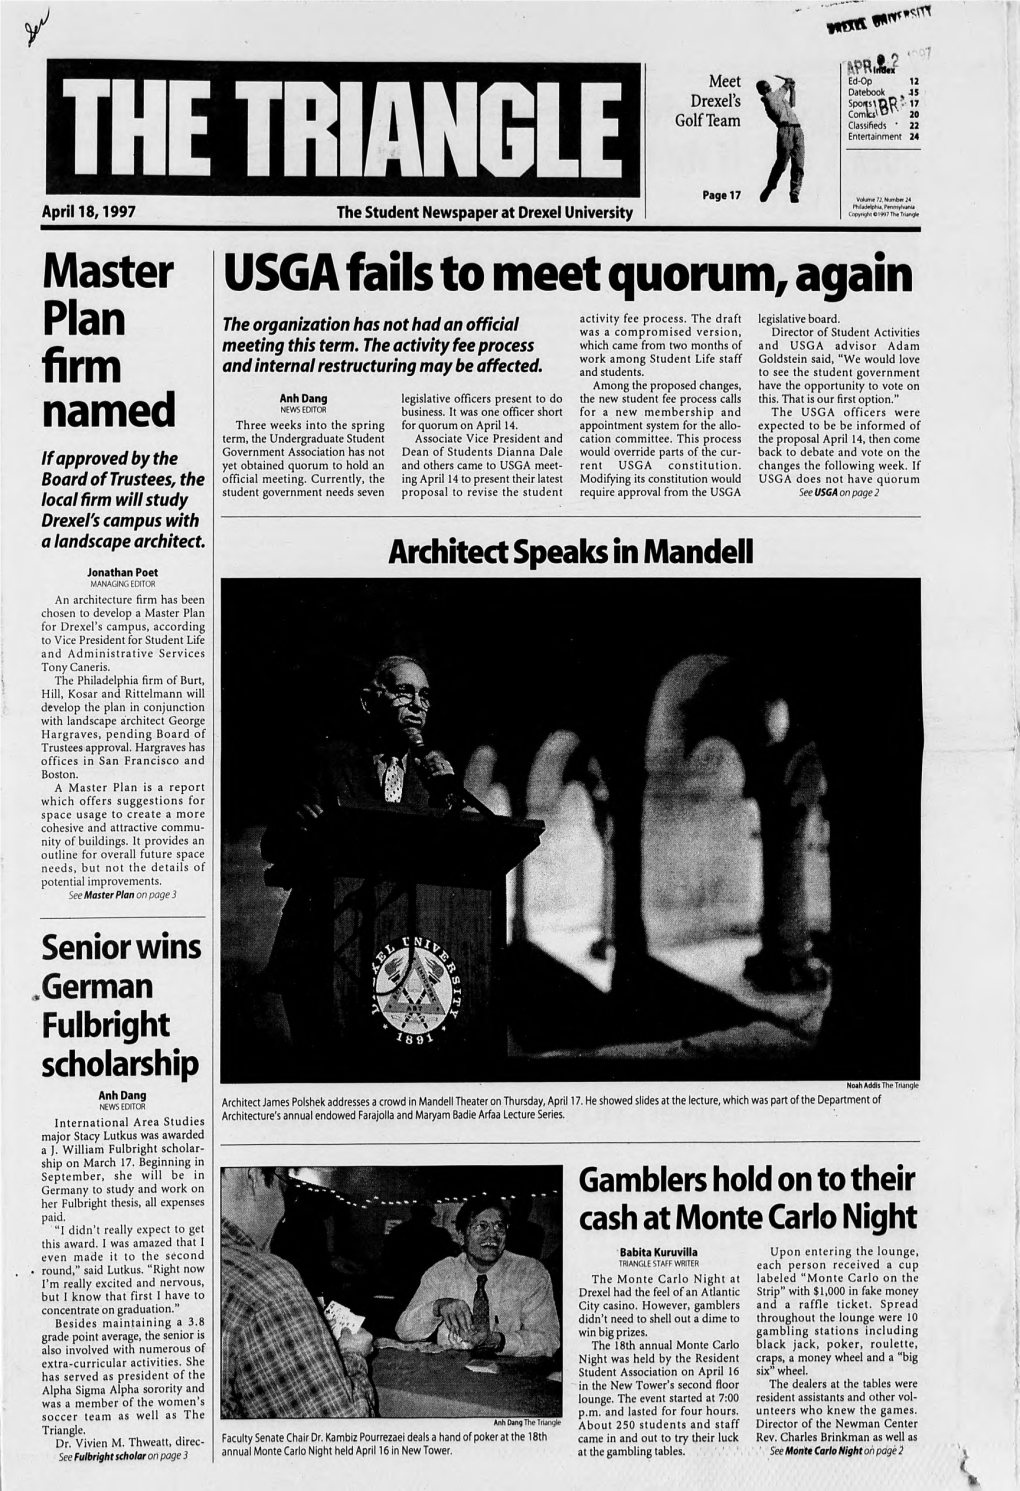 Master Plan Firm Named USGA Fails to Meet Quorum, Again